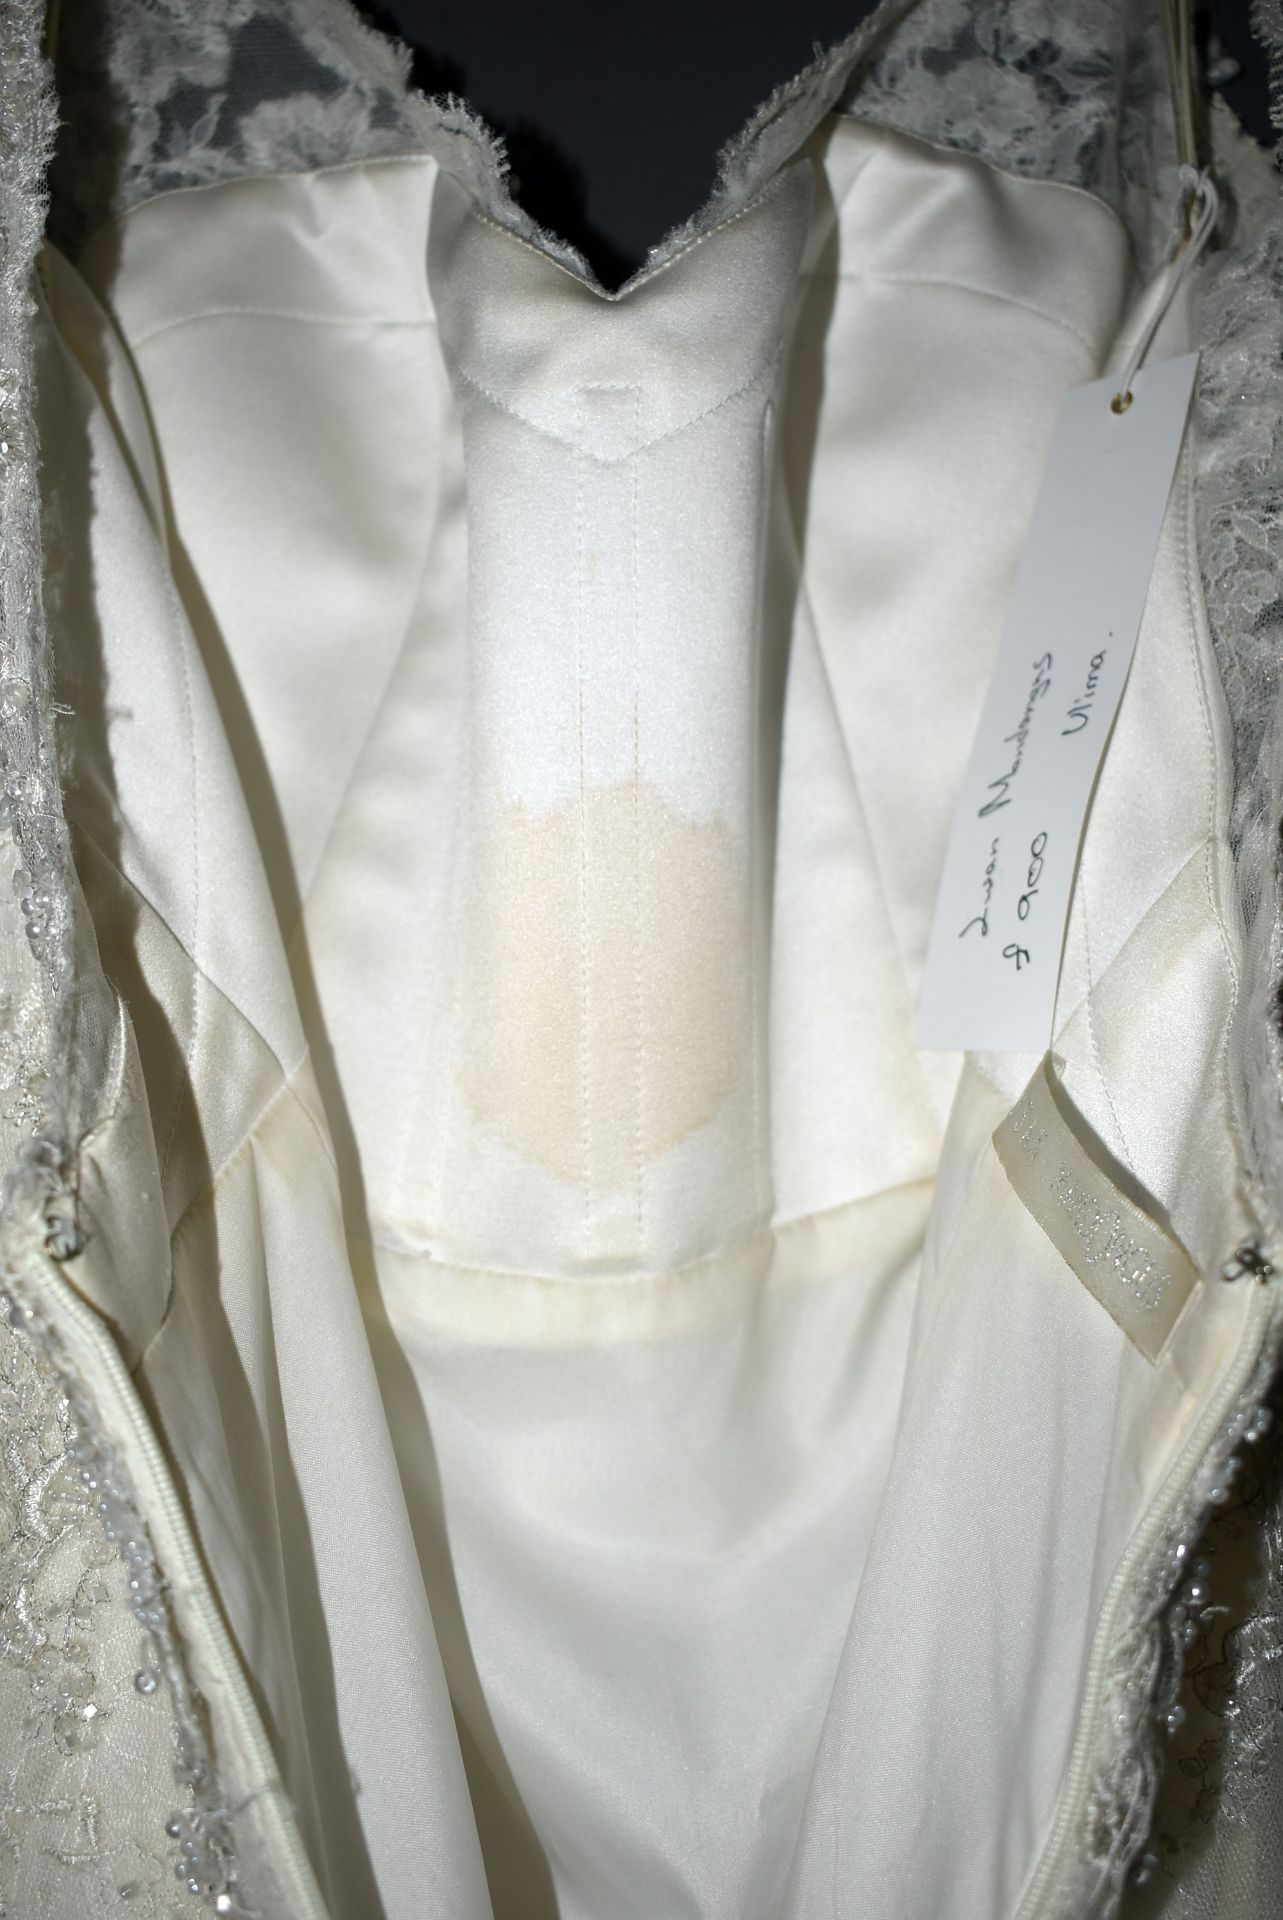 1 x LUSAN MANDONGUS Lace Overlay Designer Wedding Dress Bridal Gown RRP £1,000 UK 12 - Image 6 of 7